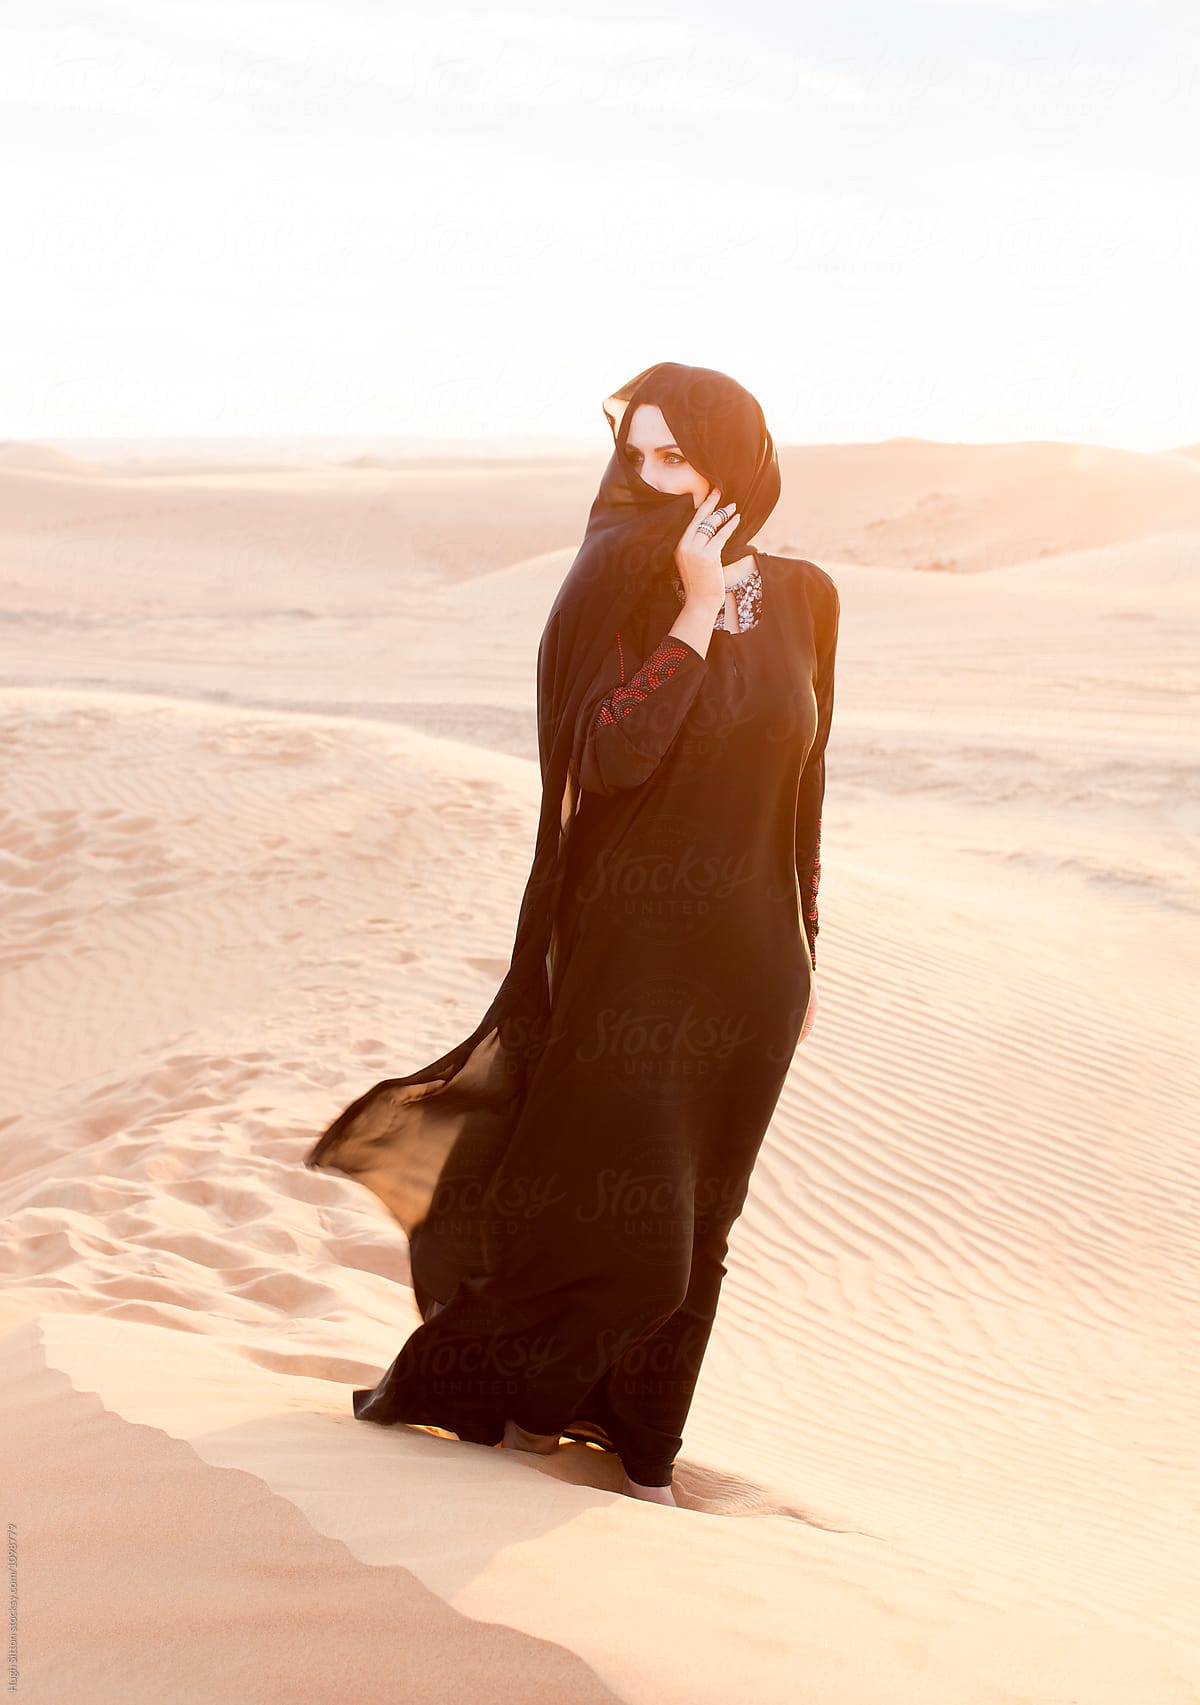 Middle Eastern Woman Wearing Hijab In Desert Dubai By Stocksy Contributor Hugh Sitton